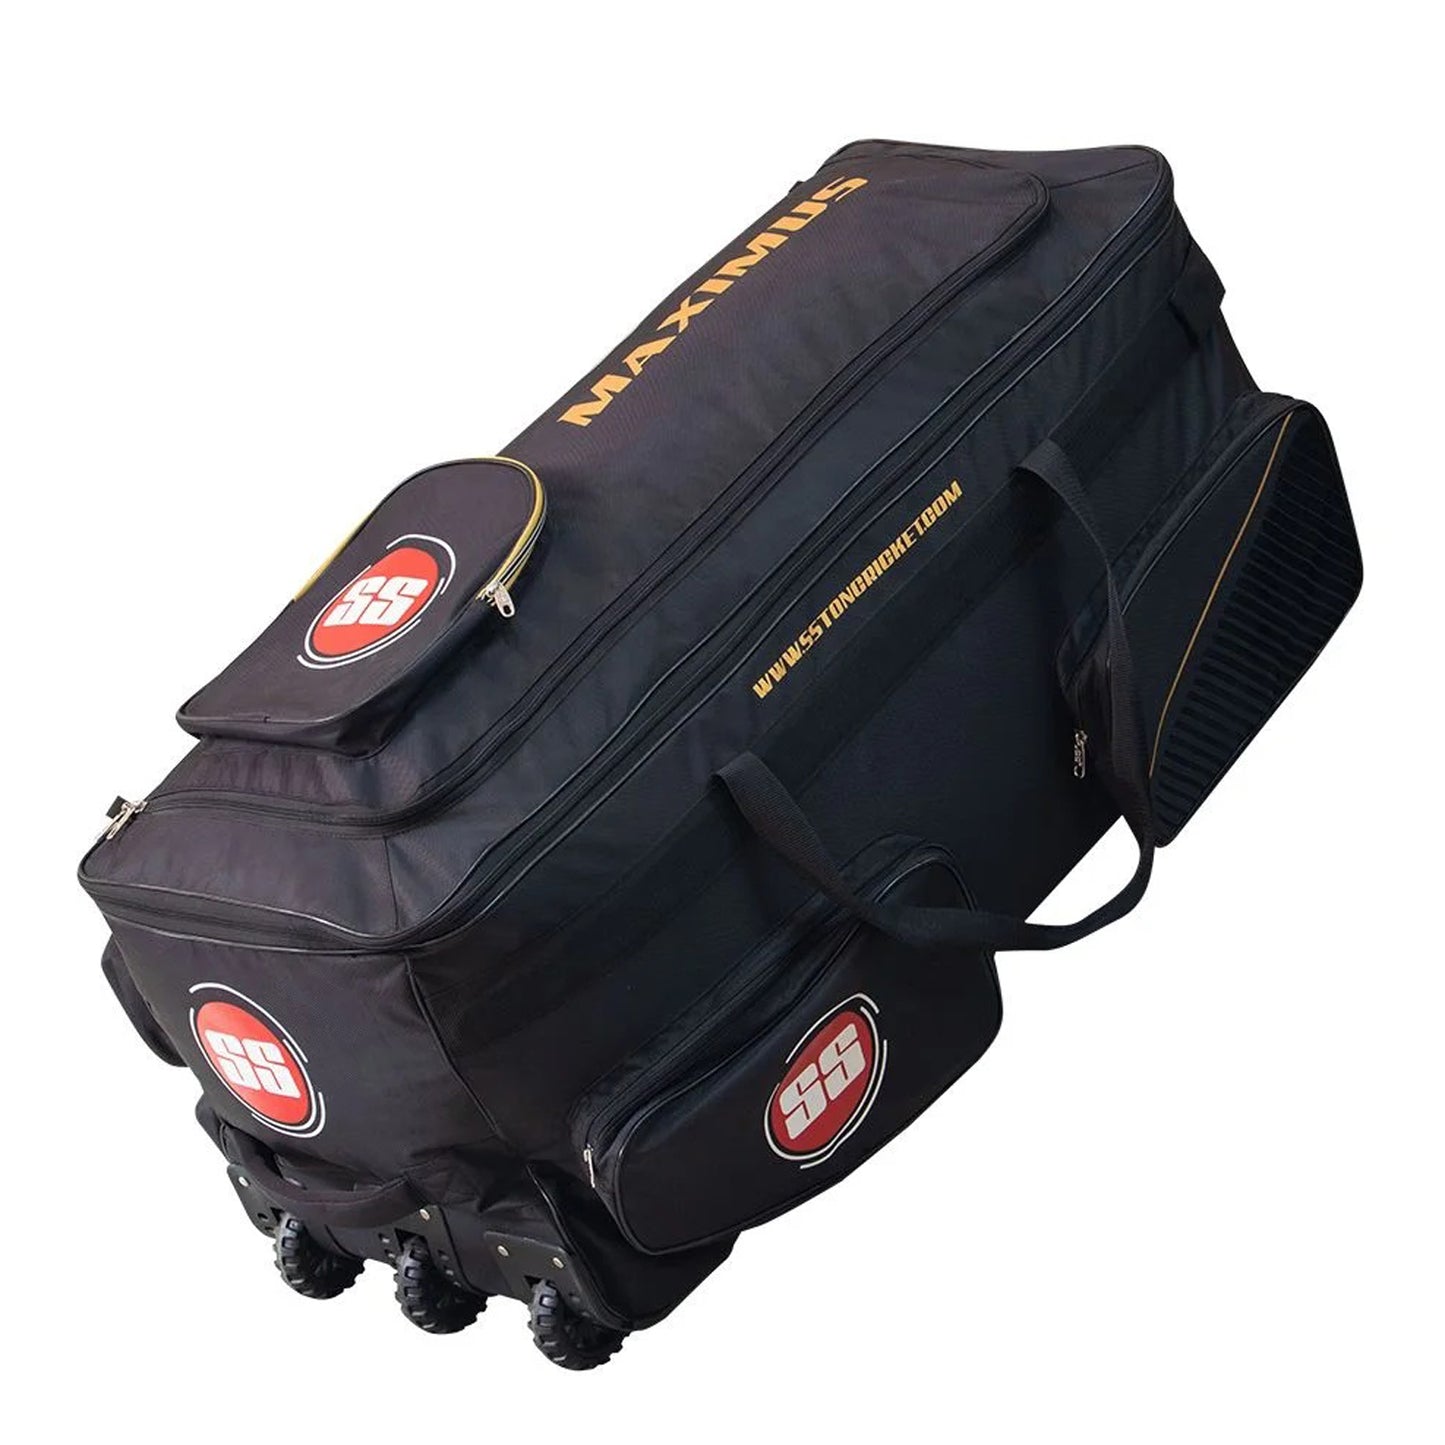 SS Maximus Wheels Cricket Kit Bag - Best Price online Prokicksports.com